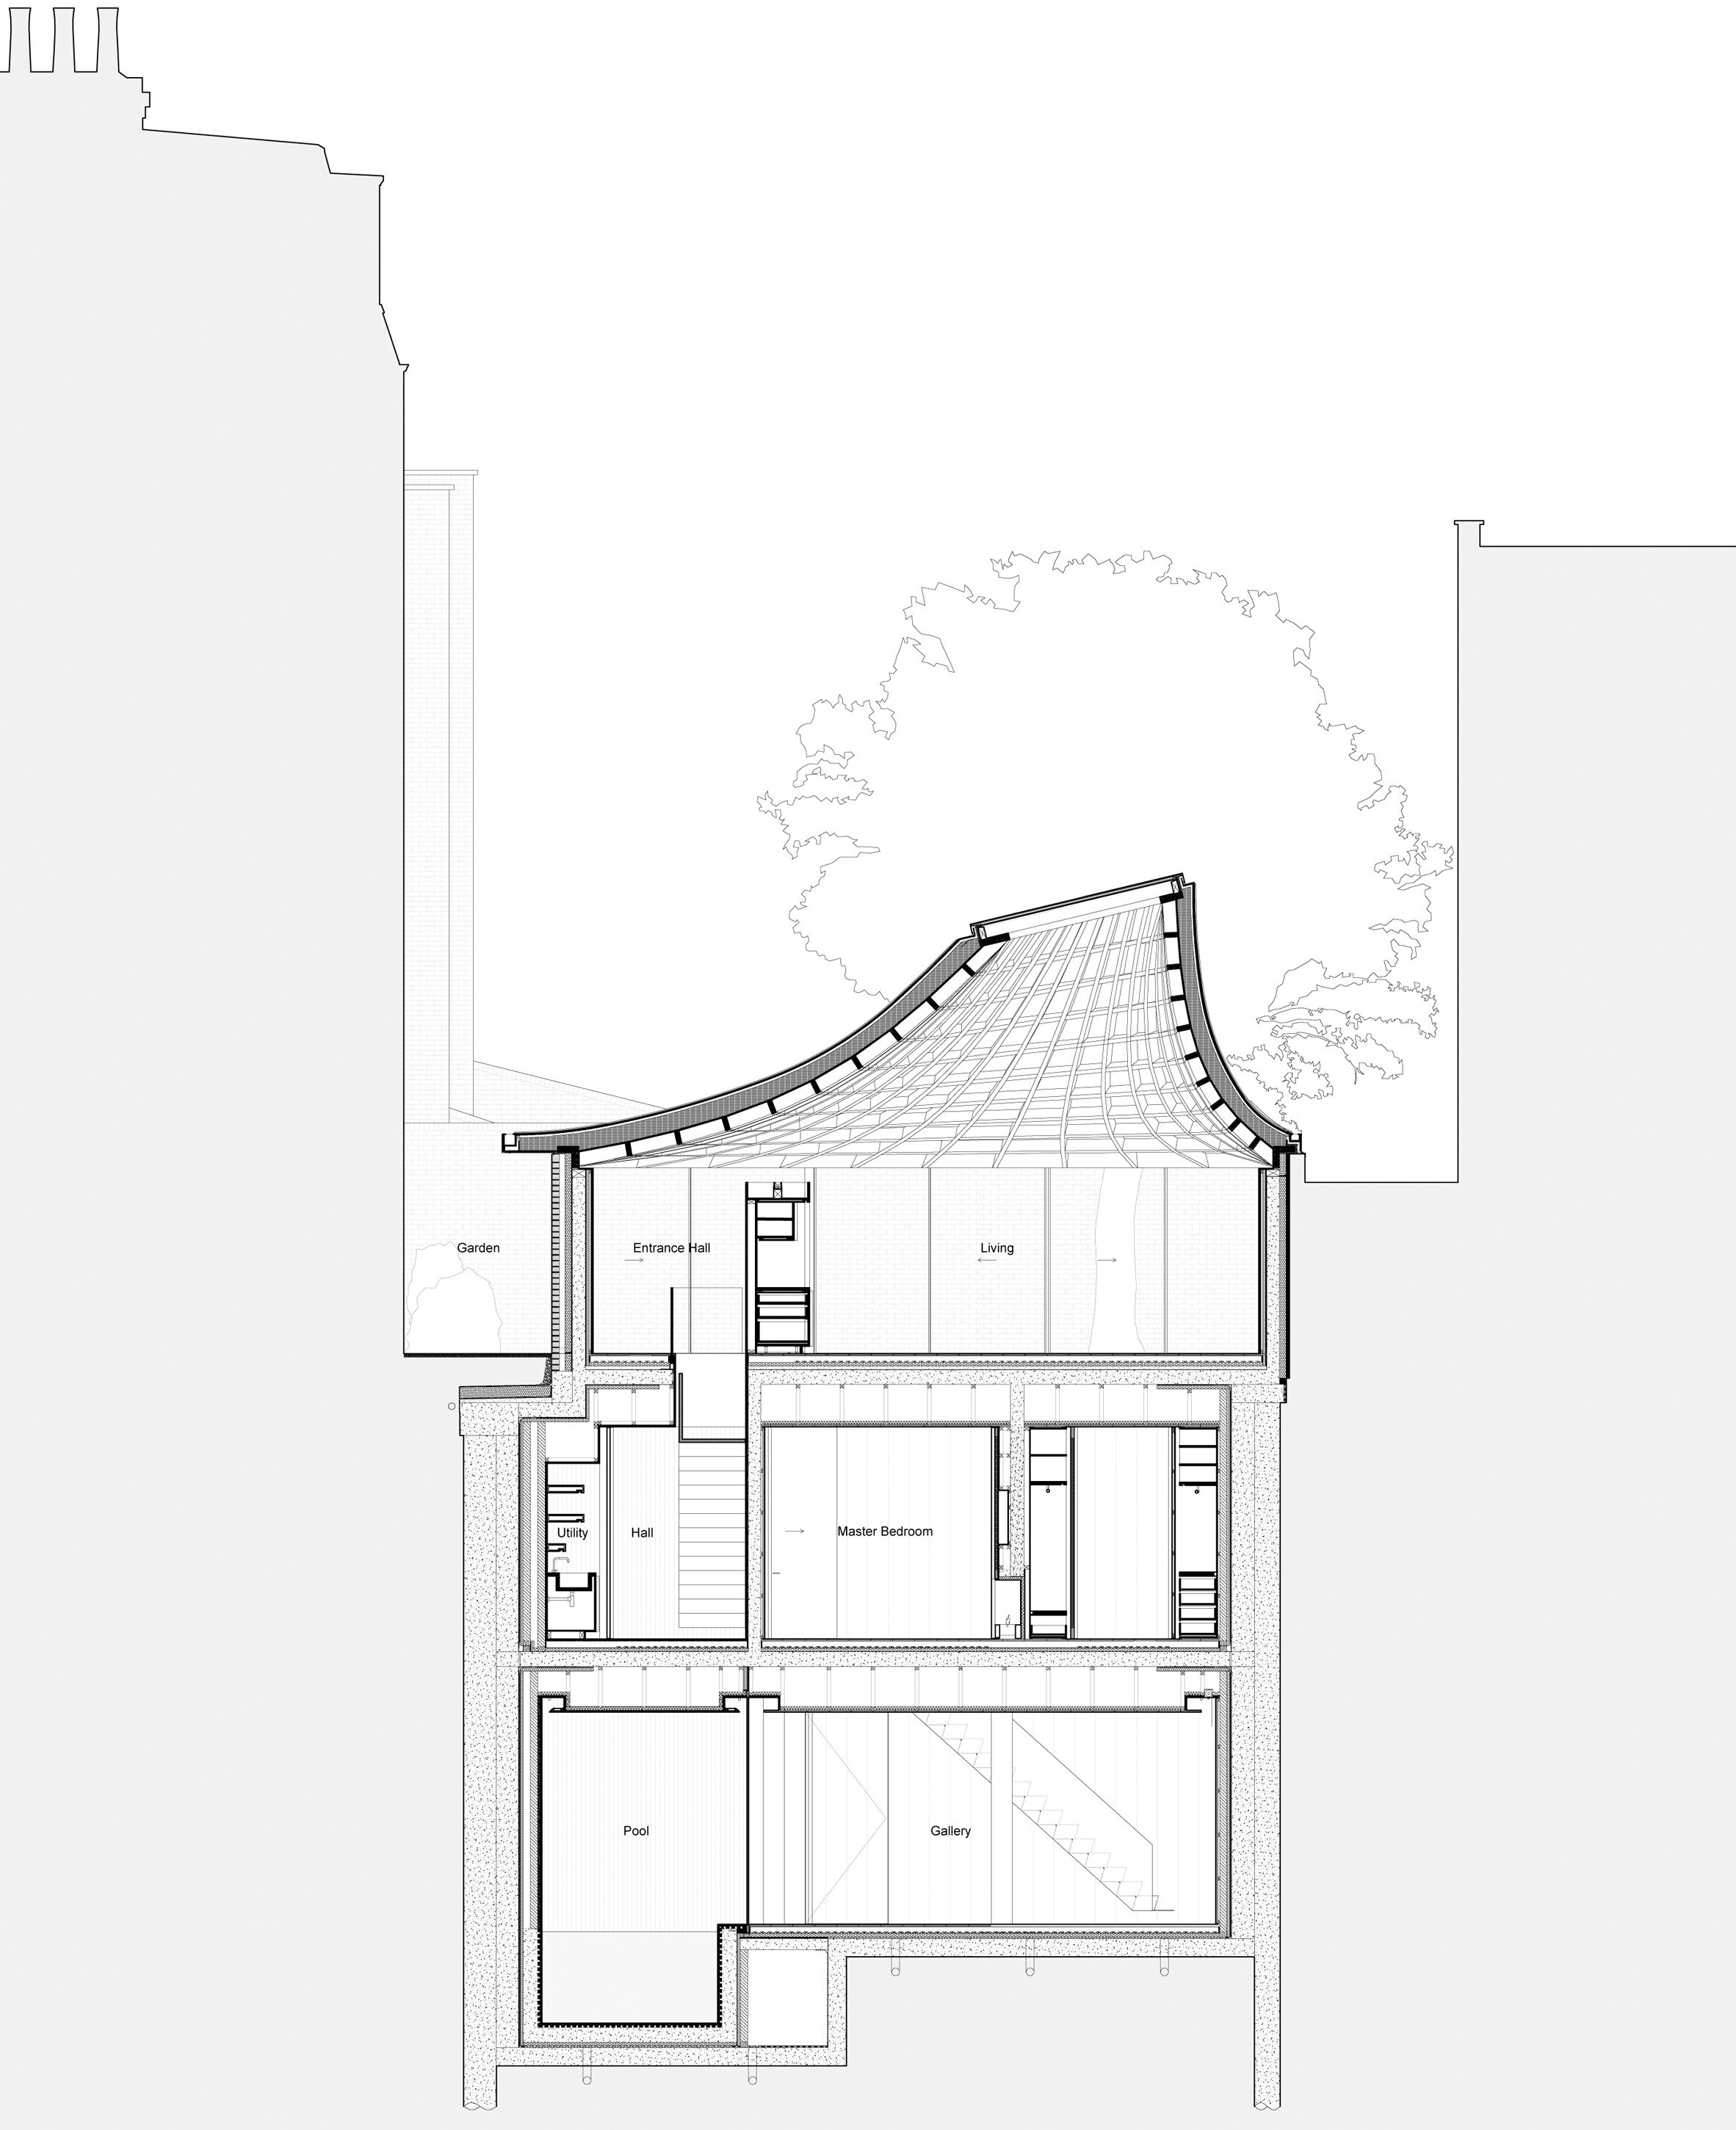 house-in-a-garden-gianni-botsford-architecture-london-uk-copper_dezeen_sec-6.jpg